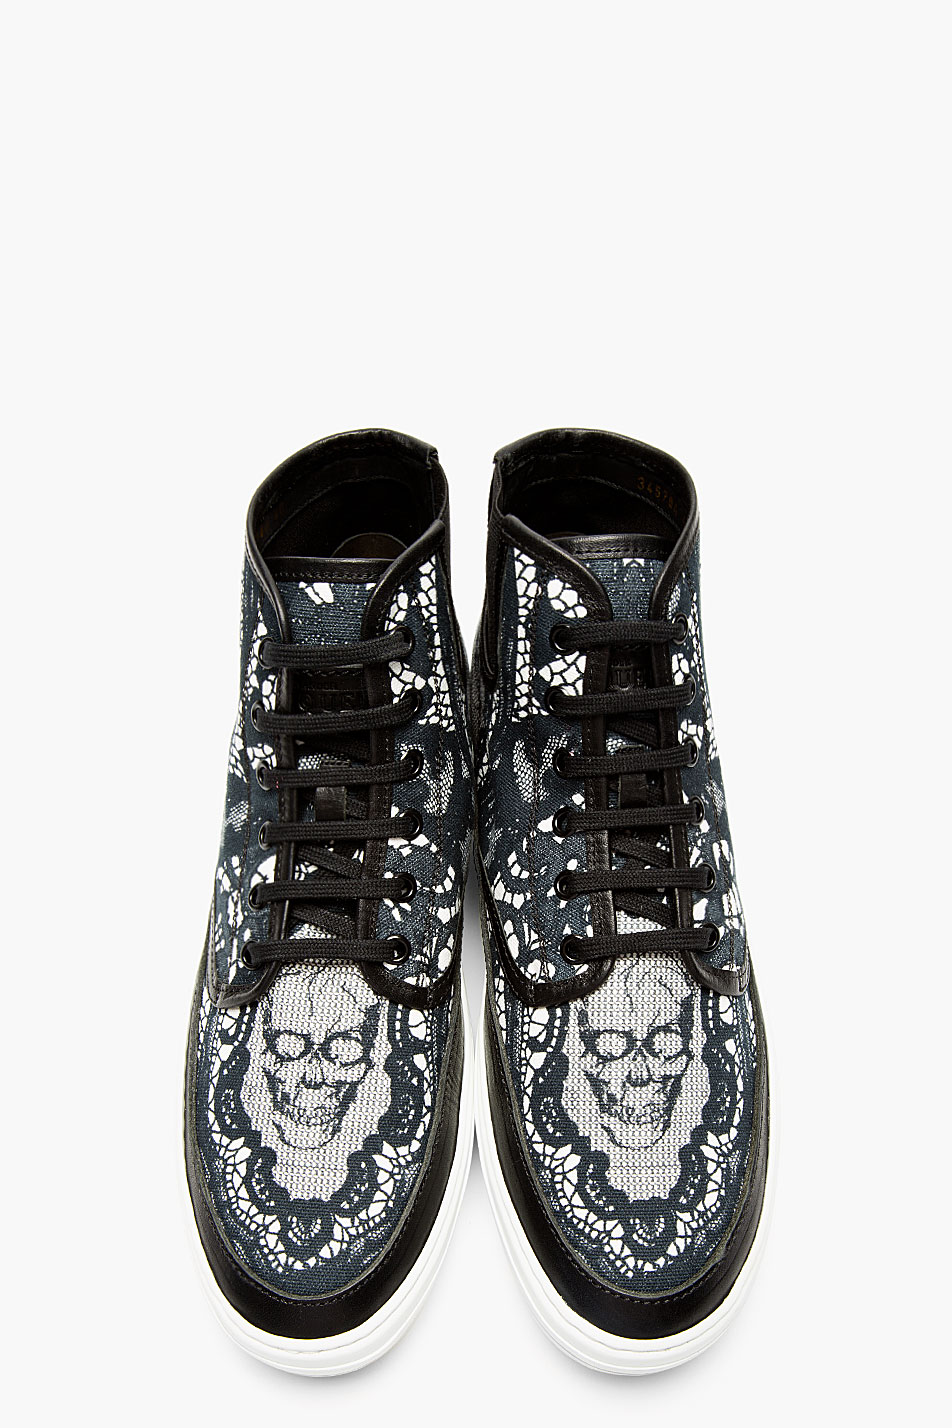 http://www.soletopia.com/wp-content/uploads/2014/01/black-skull-x-lace-high-top-sneakers-alexander-mcqueen-1.jpg